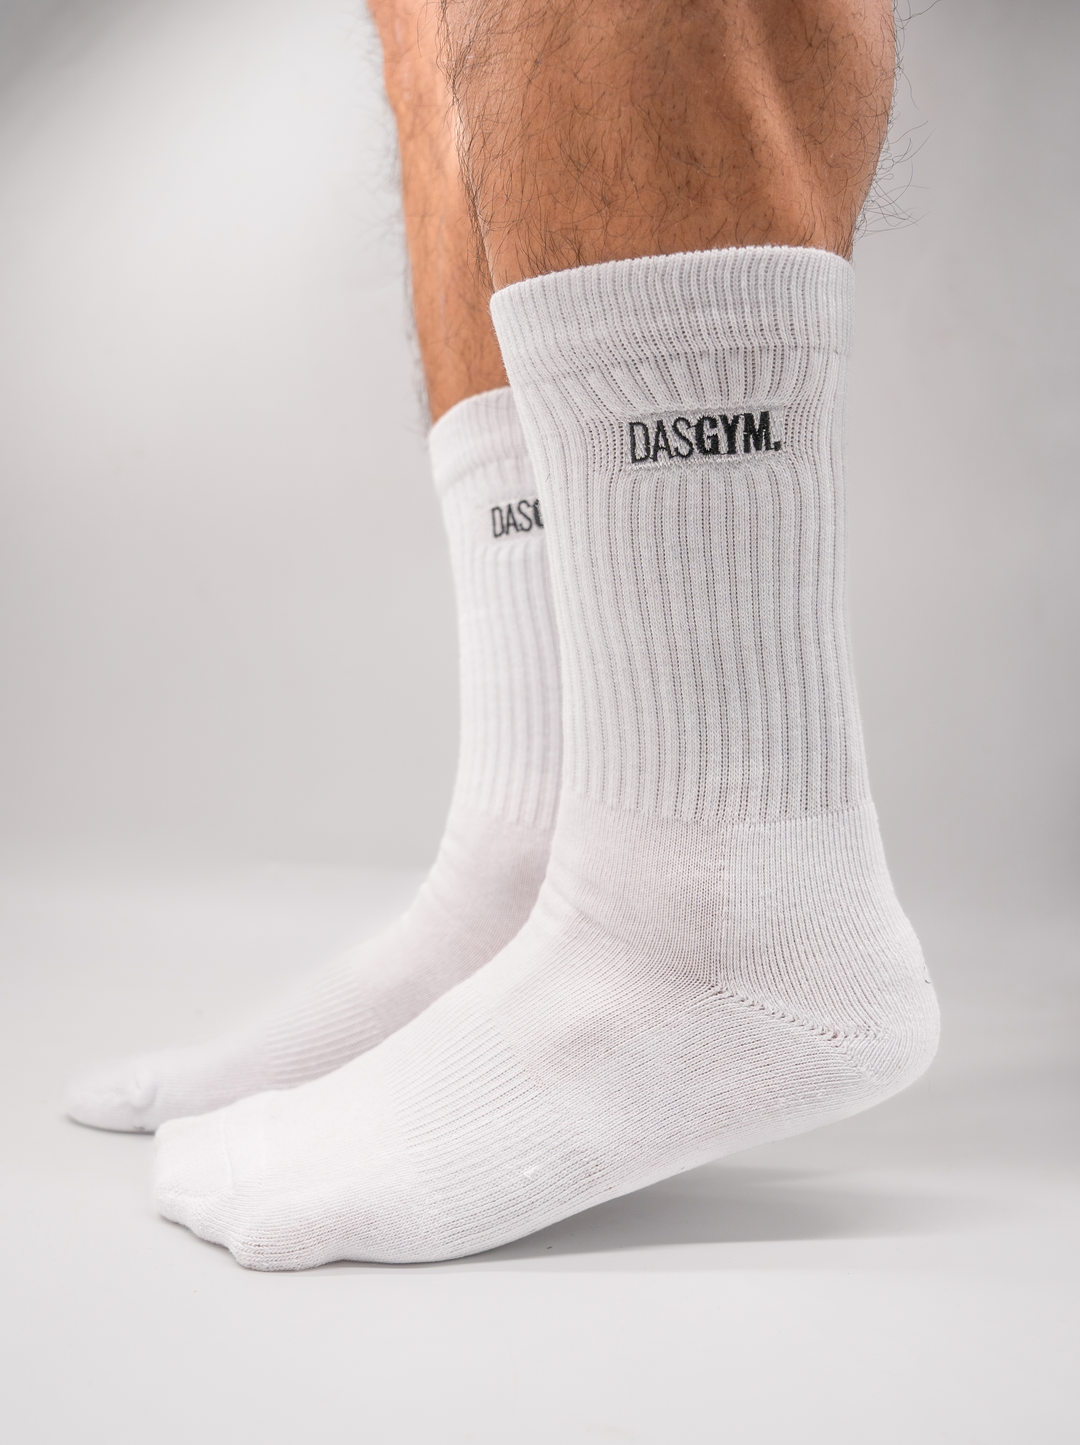 DASGYM. Socken